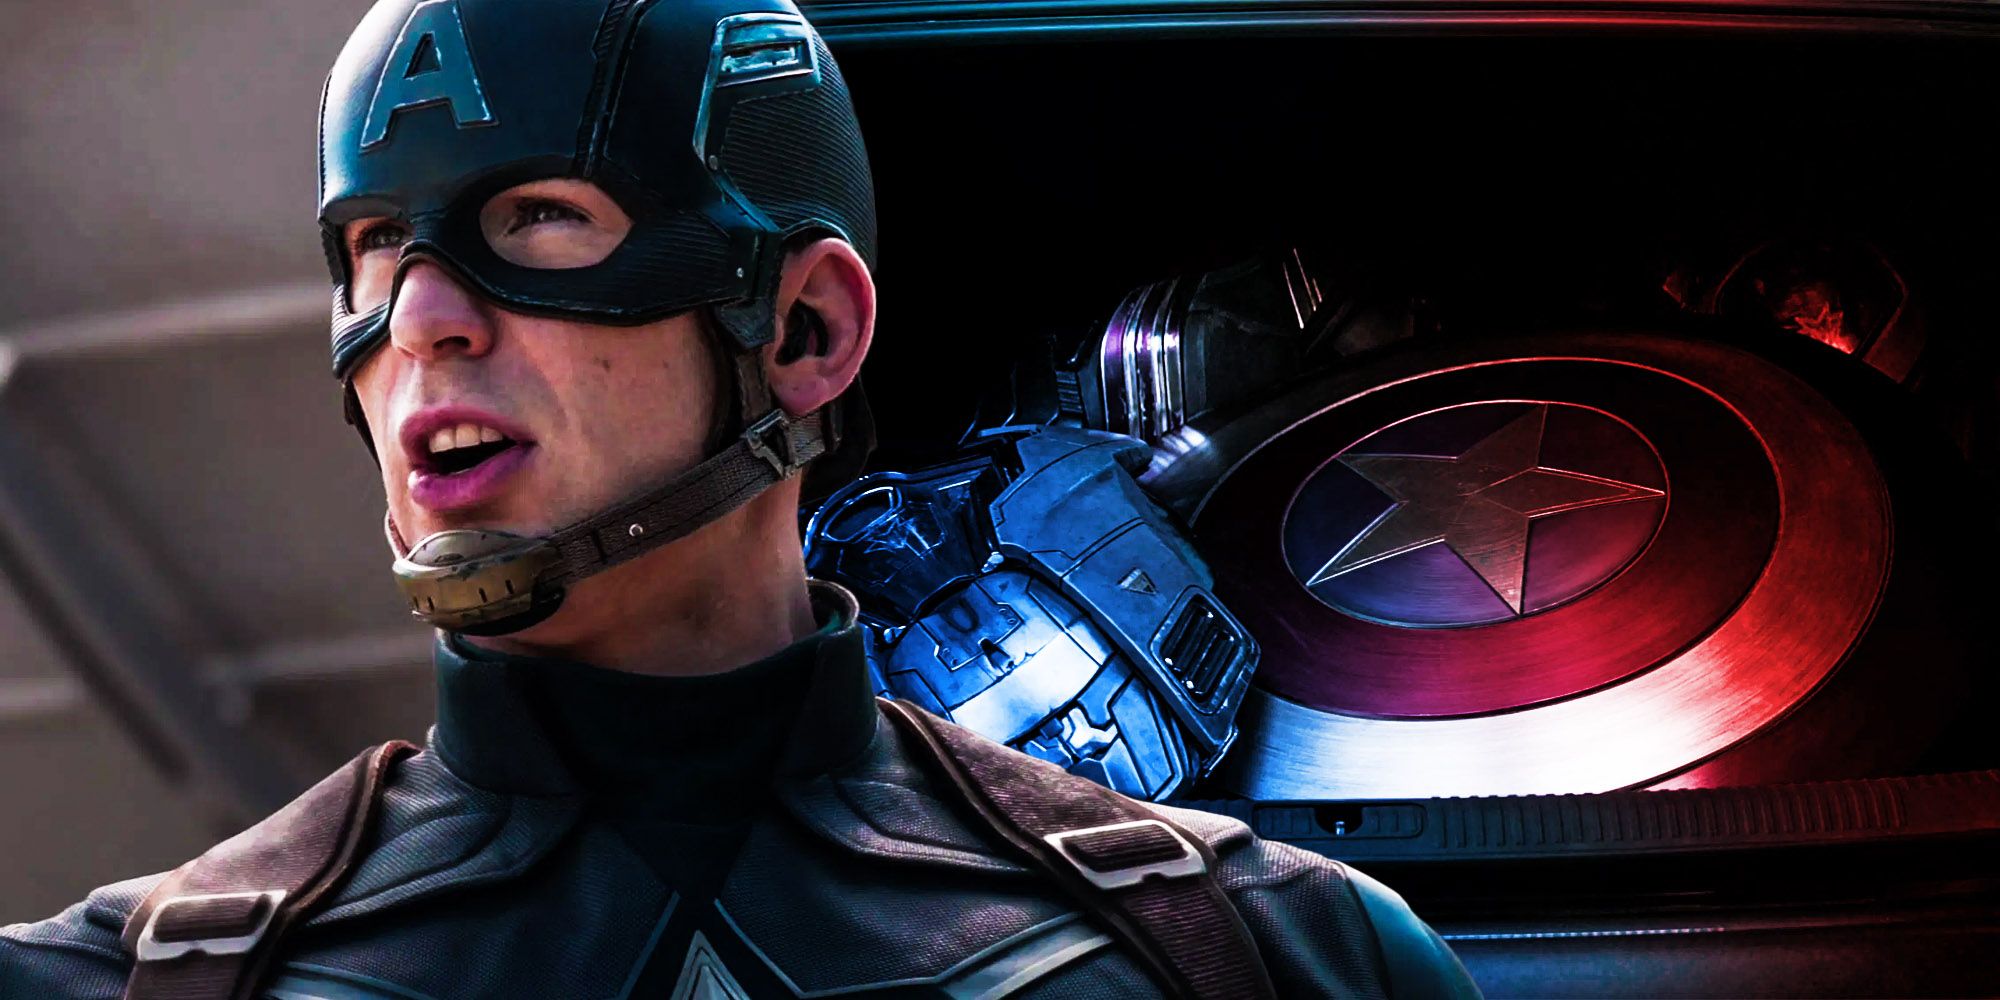 Chris Evans in Captain America Civil War in front of his ceiling